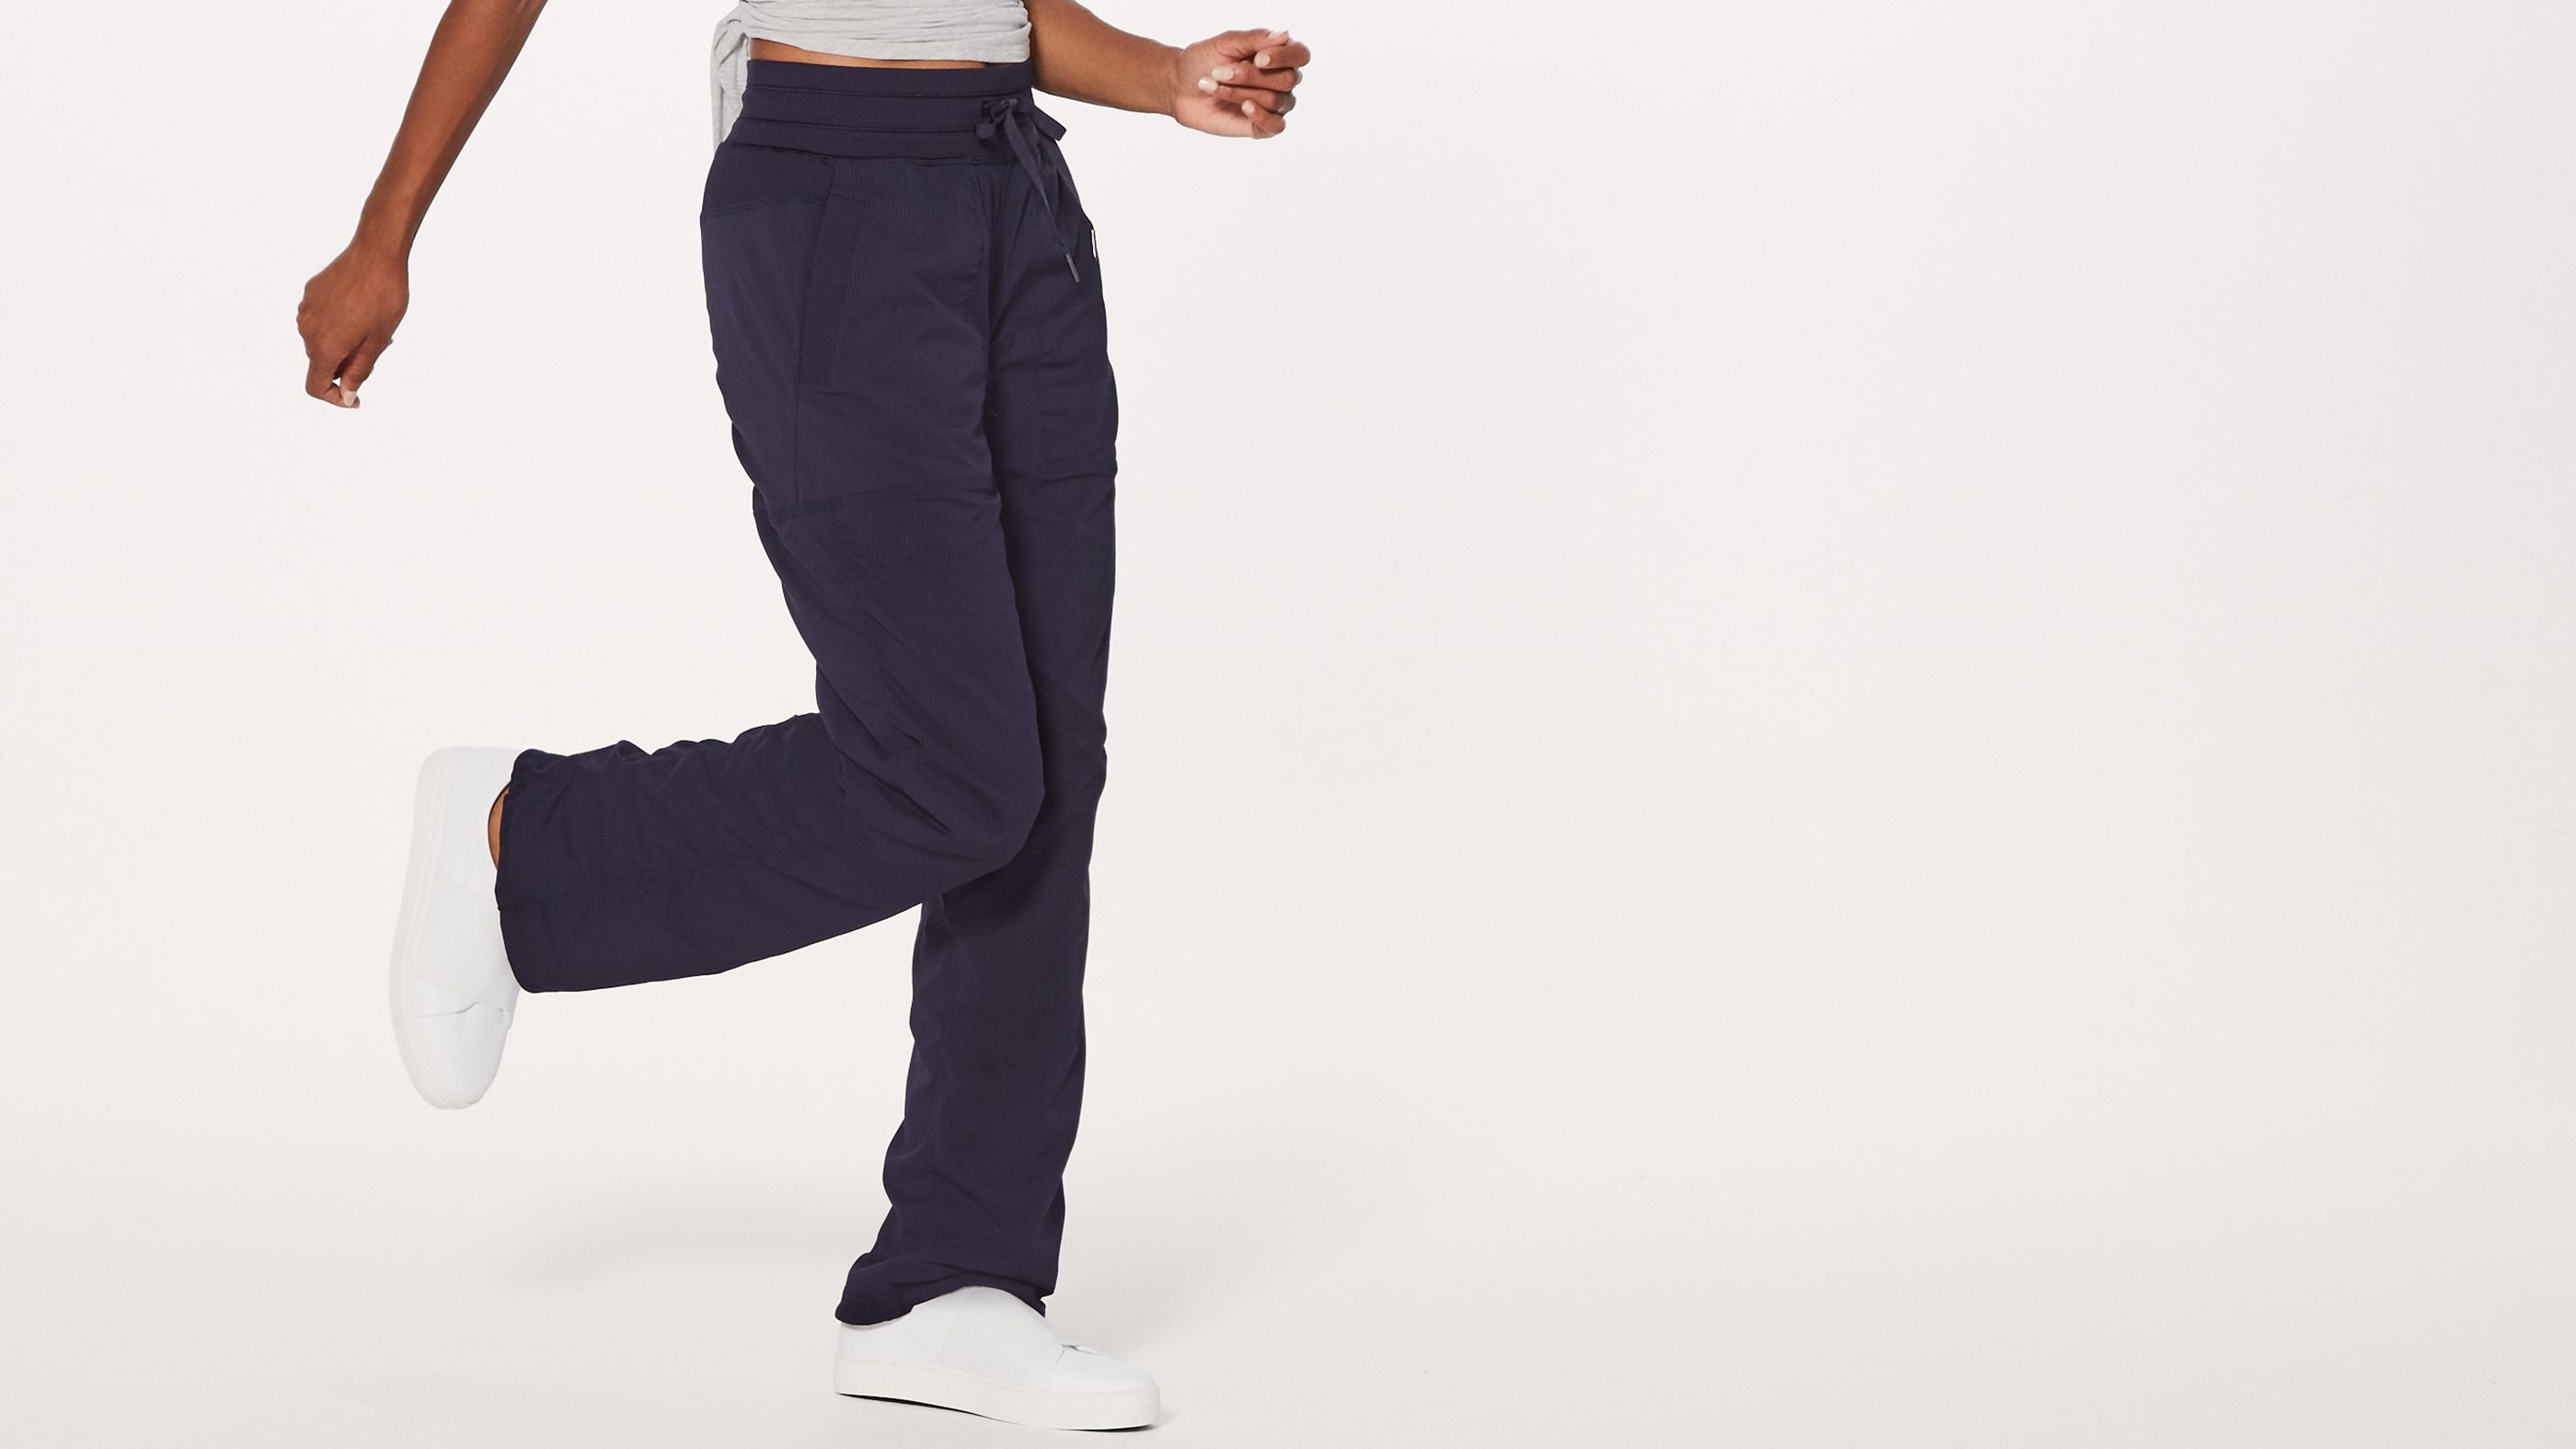 dance studio pants